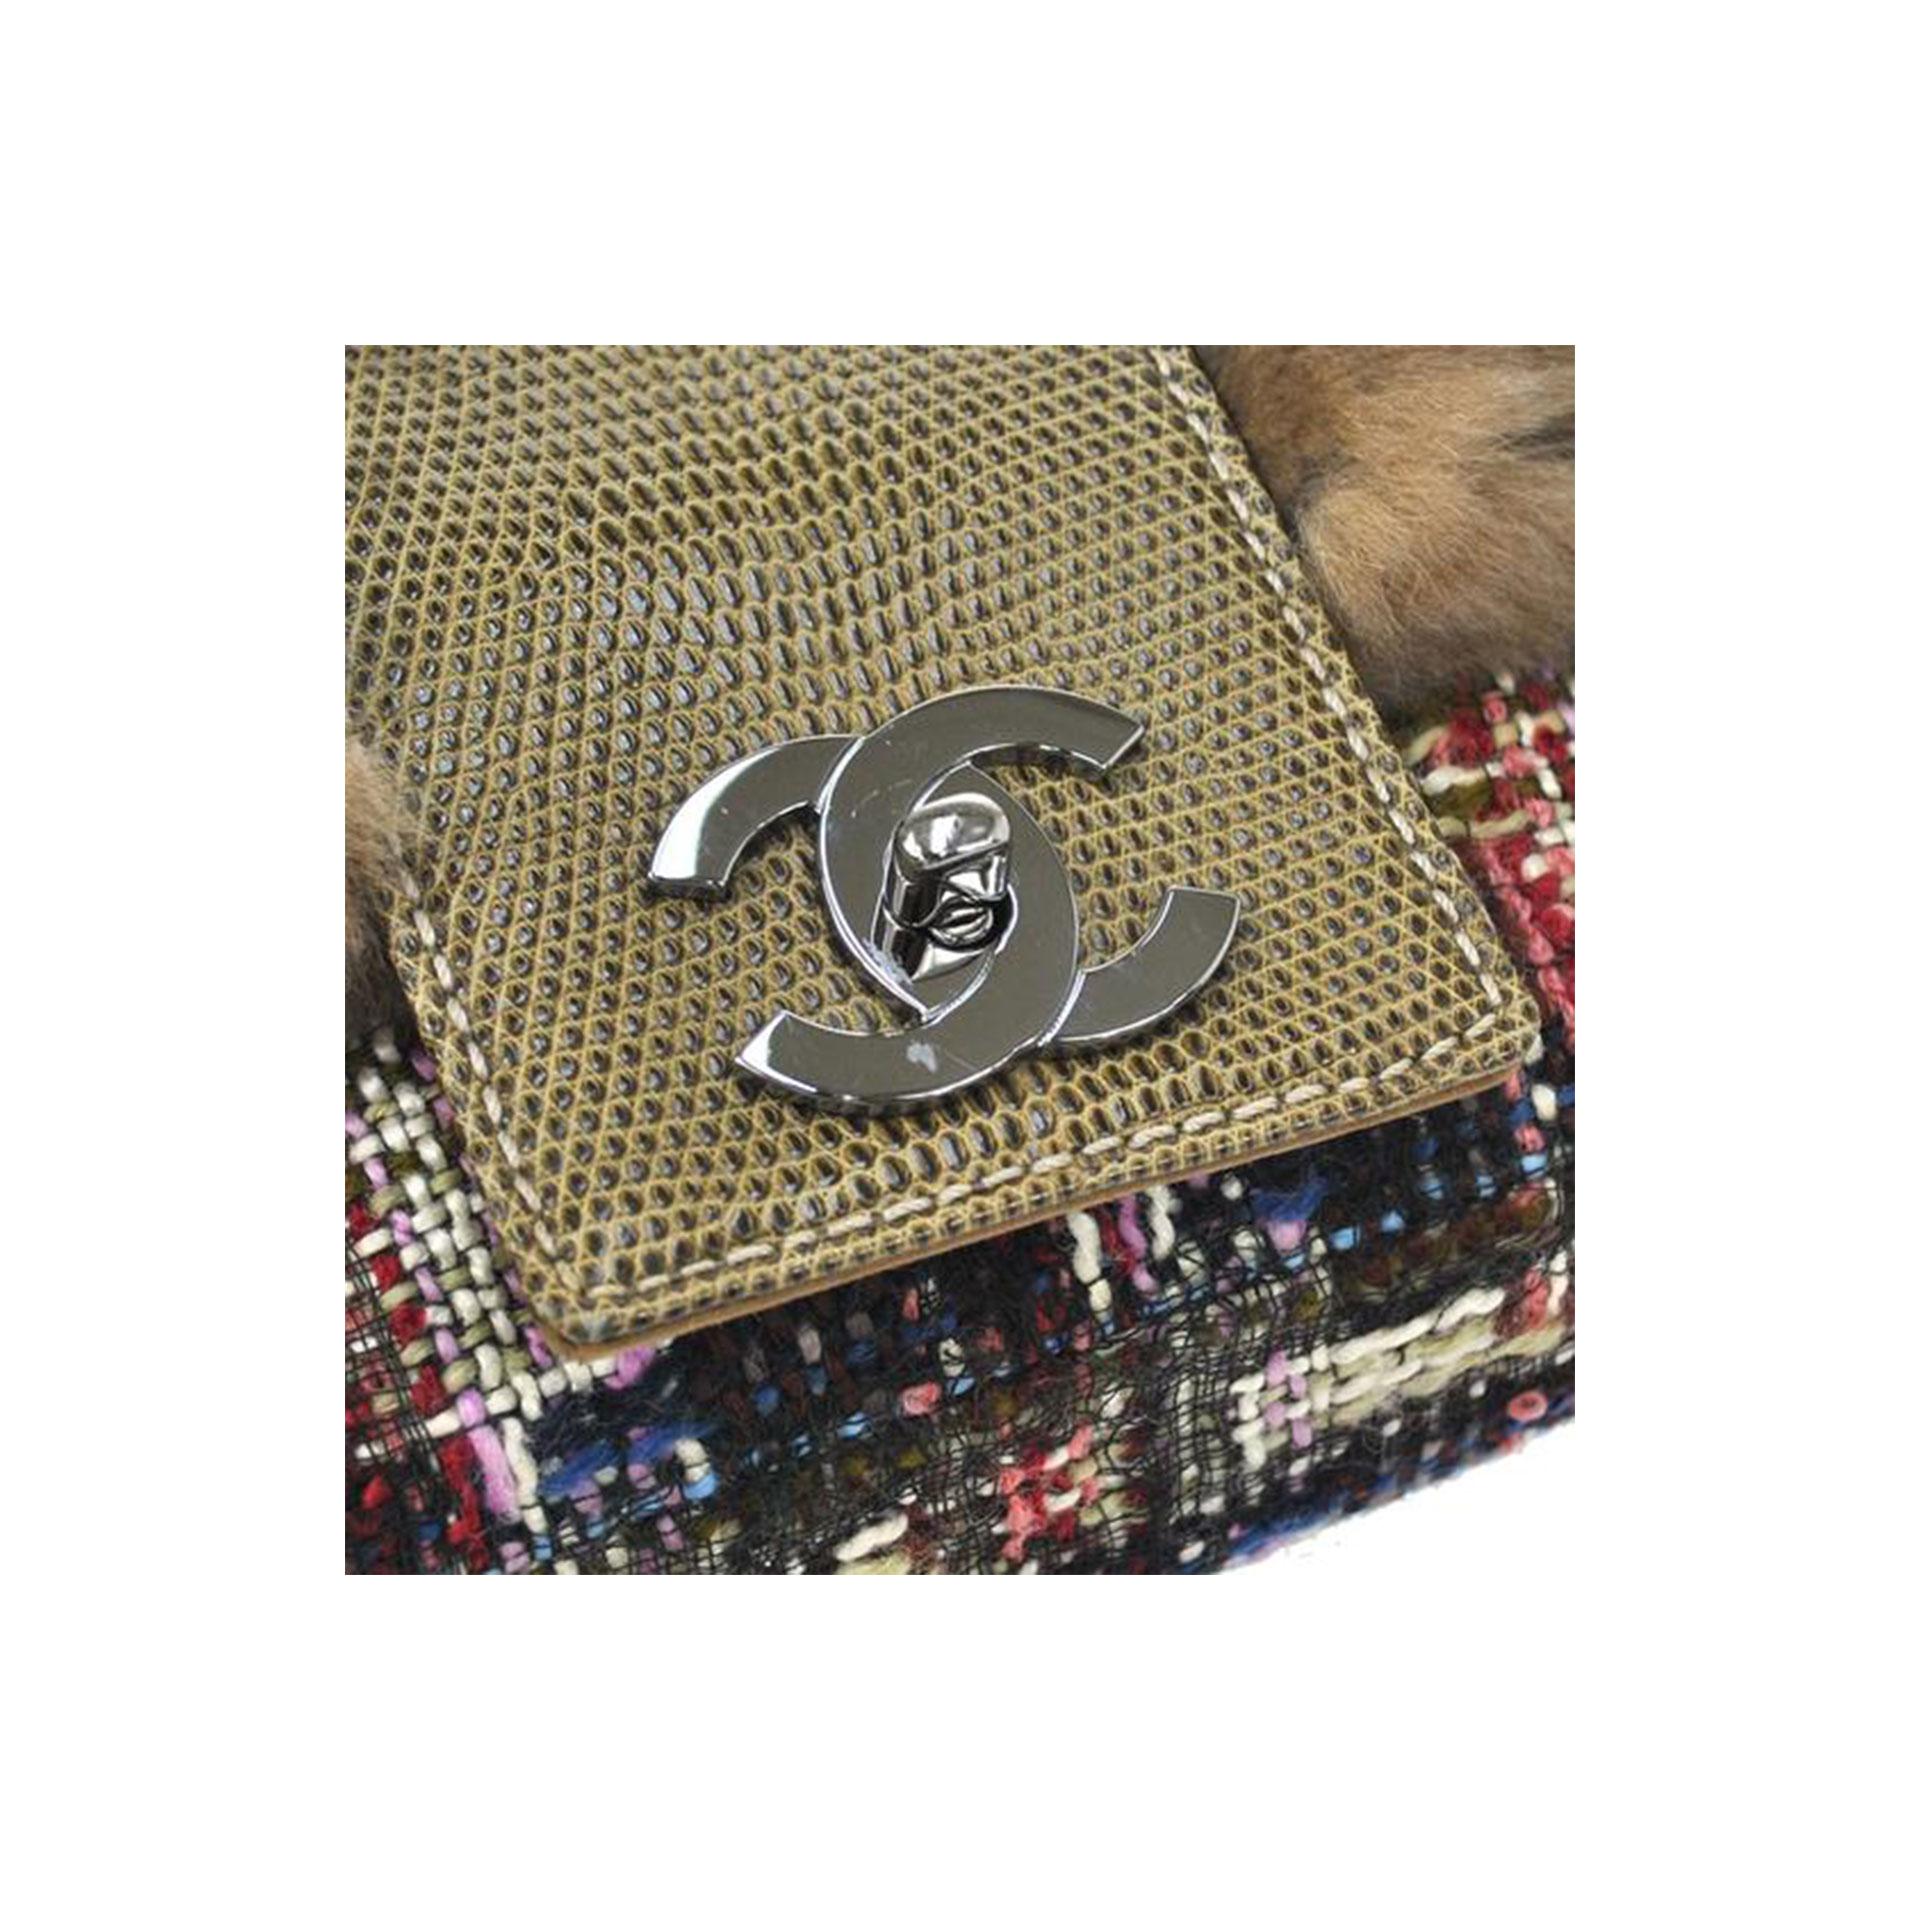 Chanel Classic Flap Rare Limited Edition & Lizard Multi-color Brown Fur Bag In Good Condition For Sale In Miami, FL